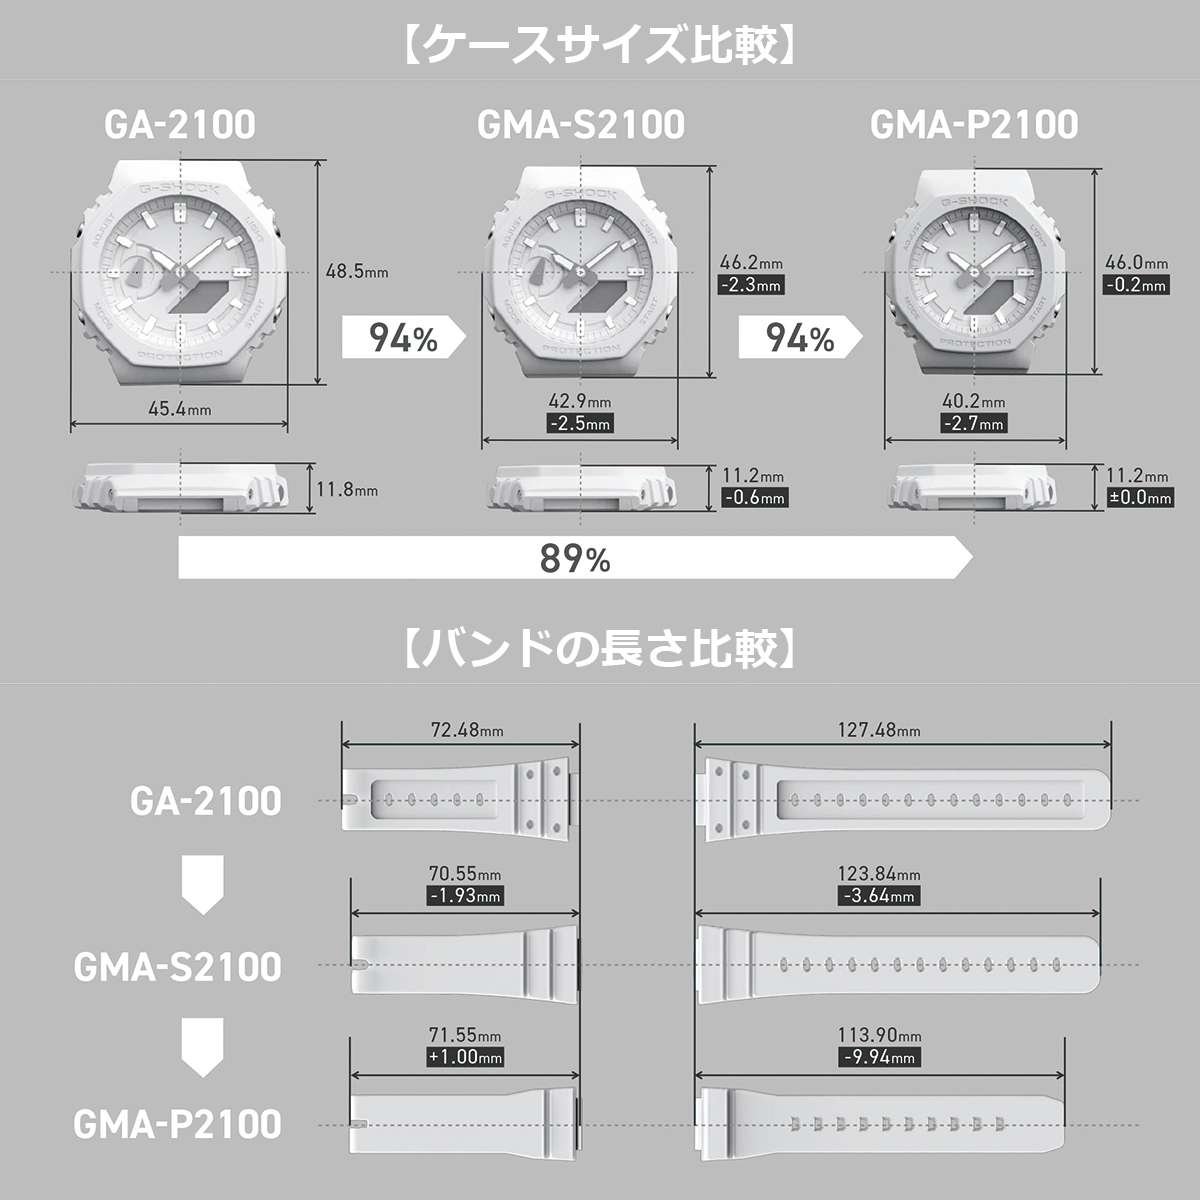 G-SHOCK コンパクト TONE-ON-TONE GMA-P2100-2AJF レディース 腕時計 電池式 アナデジ オクタゴン ターコイズブルー  樹脂バンド 国内正規品